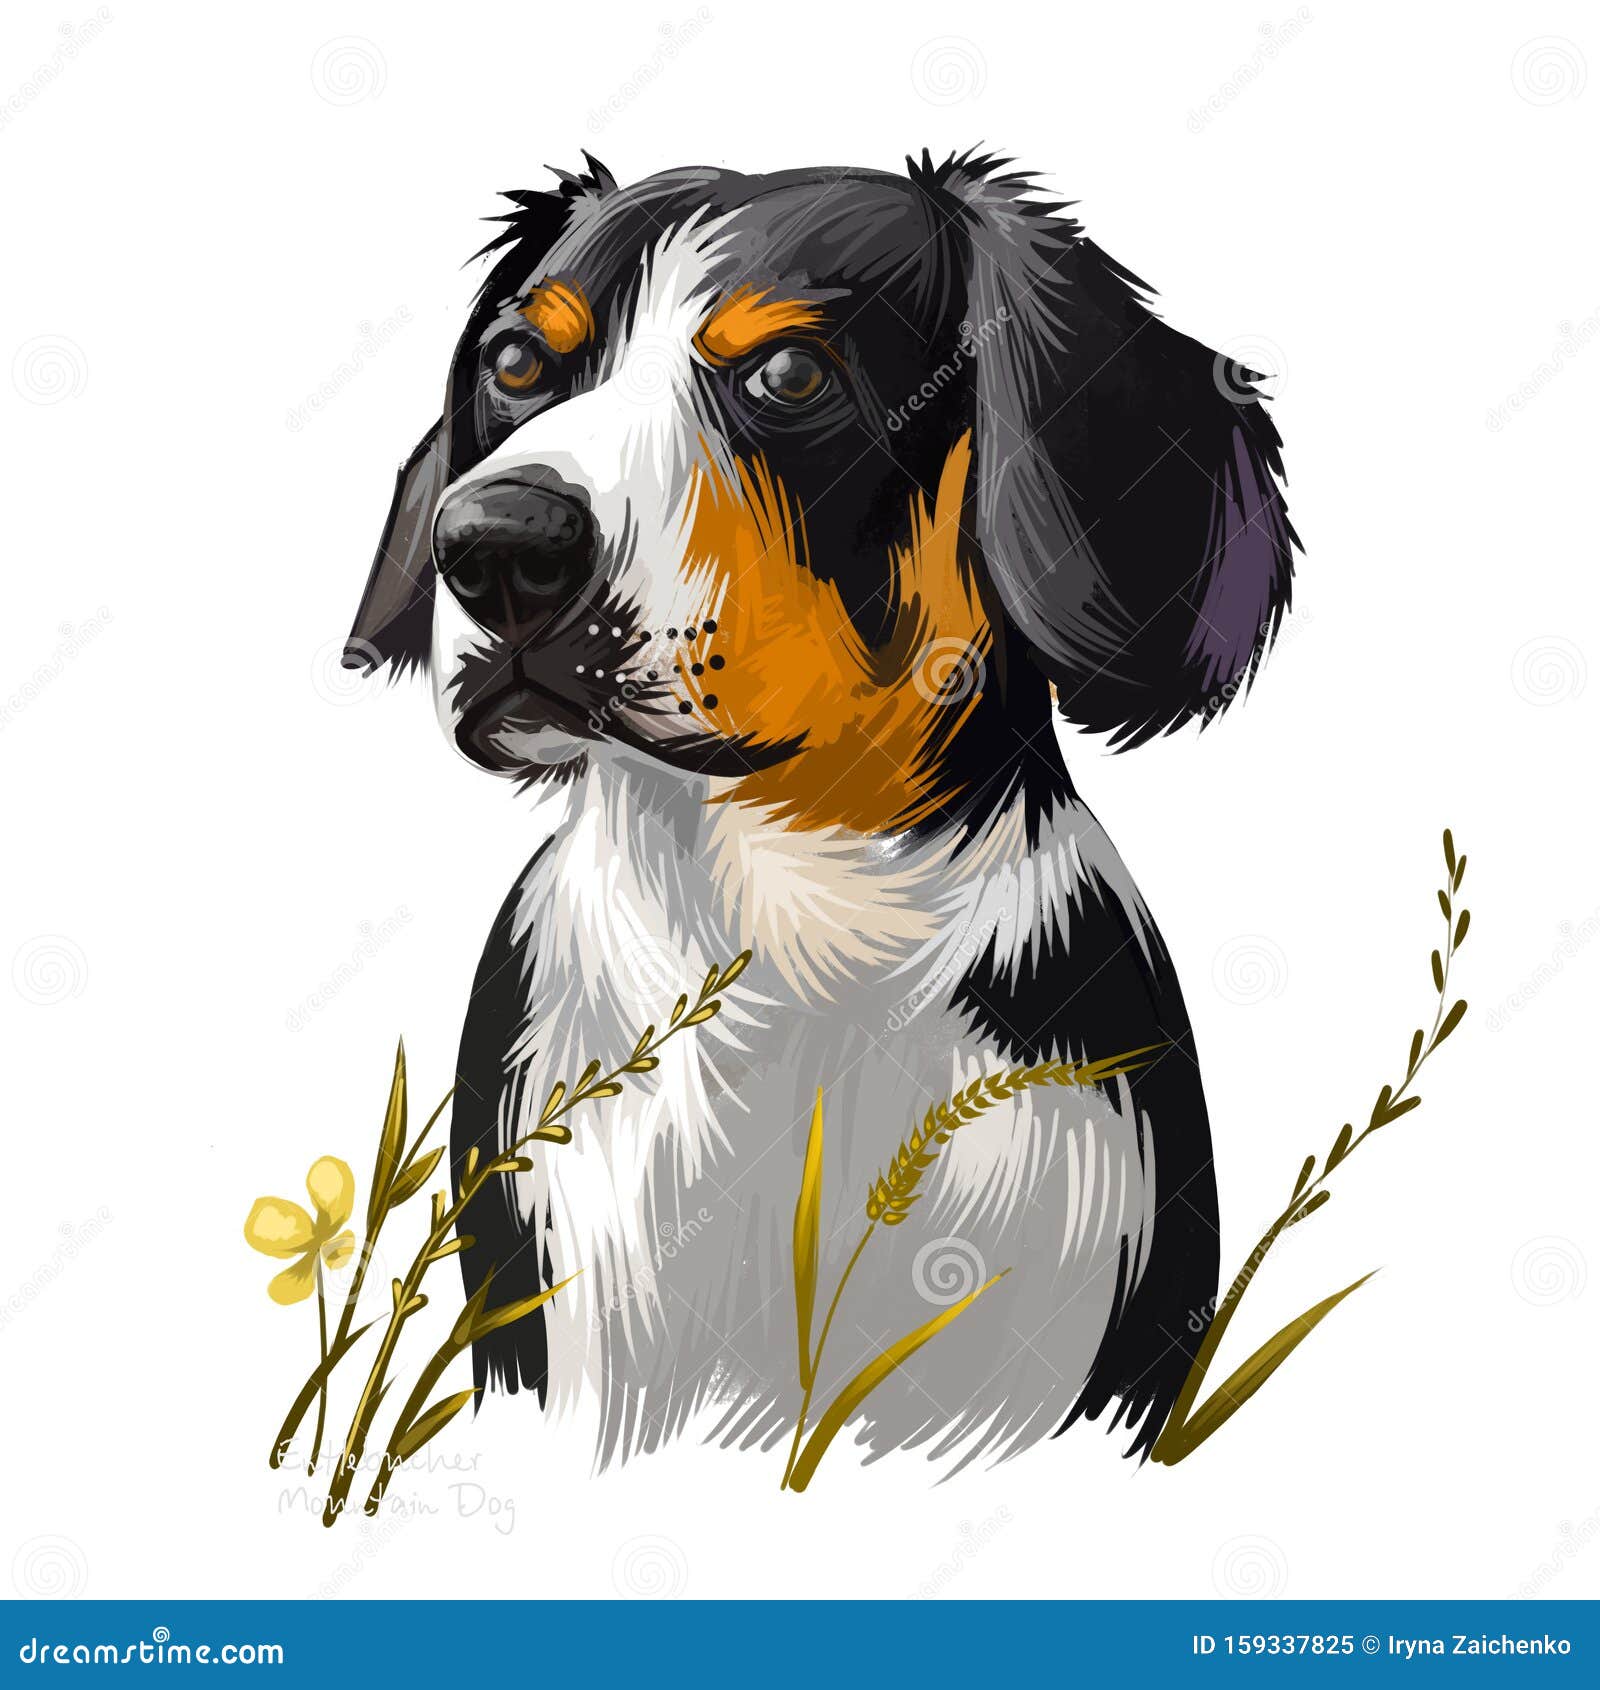 Entlebucher Mountain Dog, Entlebucher Sennenhund Dog Digital Art Illustration Isolated on White Background. Switzerland Stock Illustration - Illustration of drawn, friend: 159337825